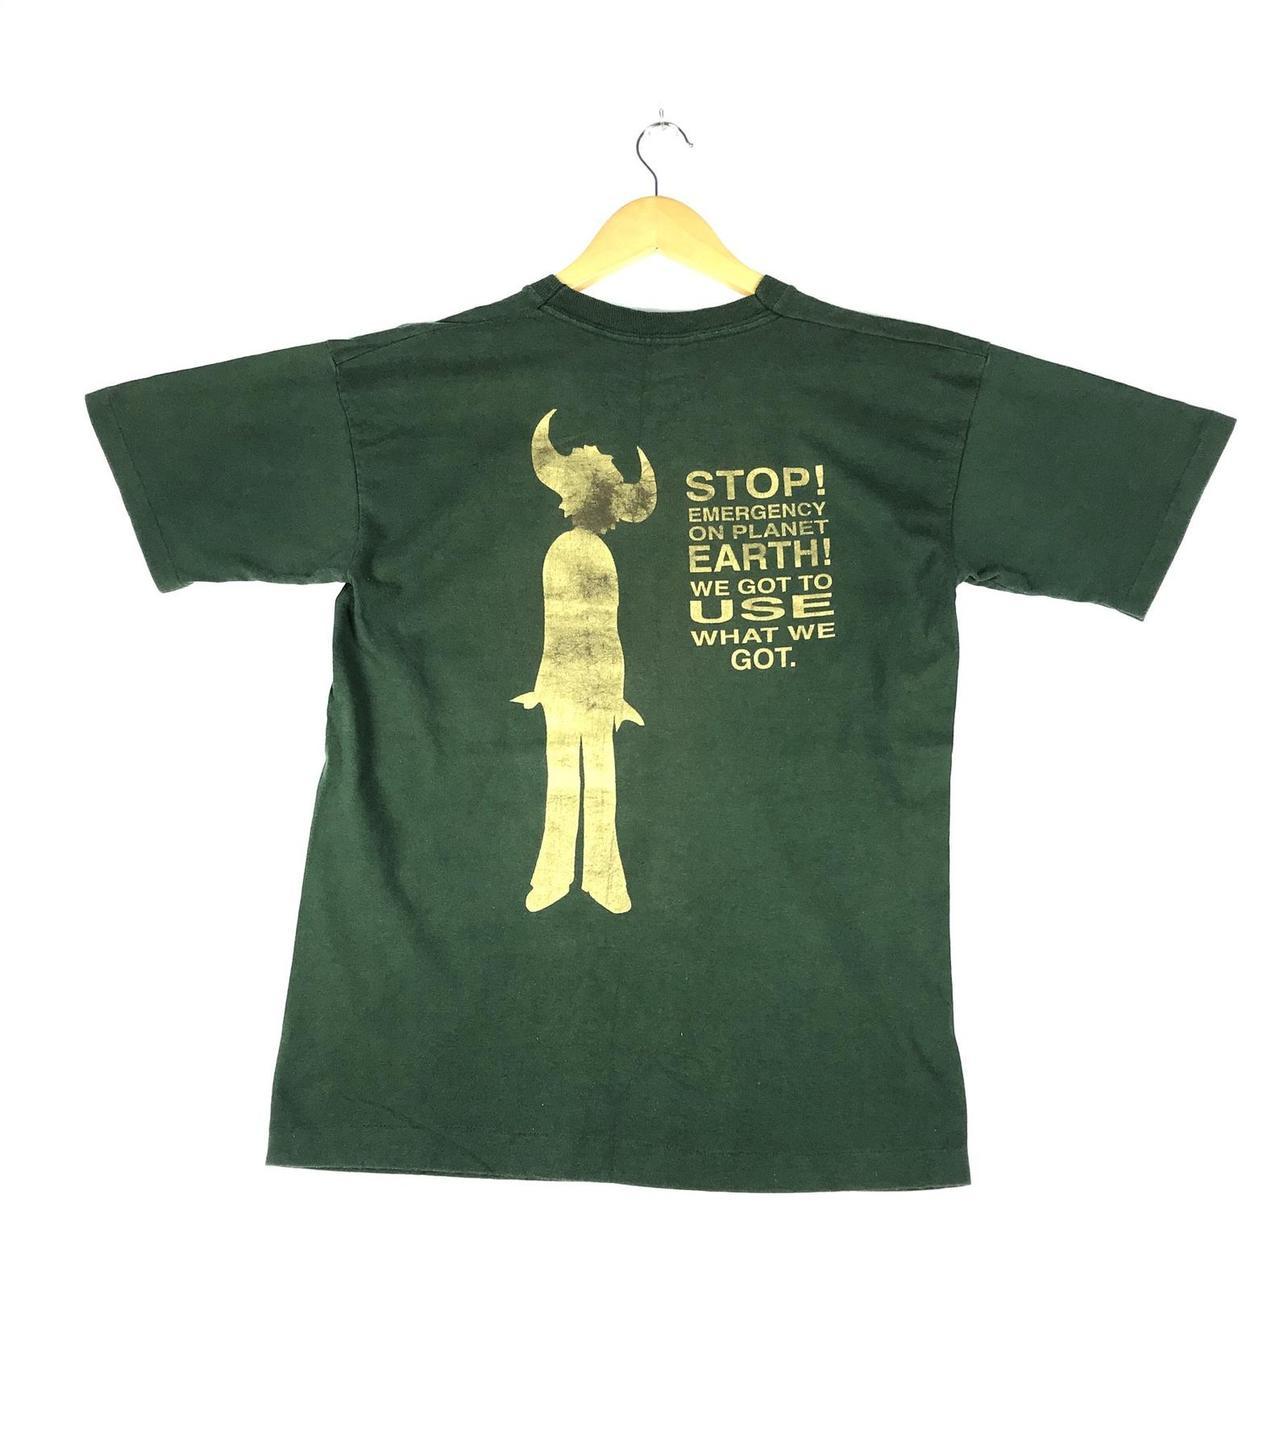 the gold dig — 1992 Jamiroquai emergency on planet earth tshirt